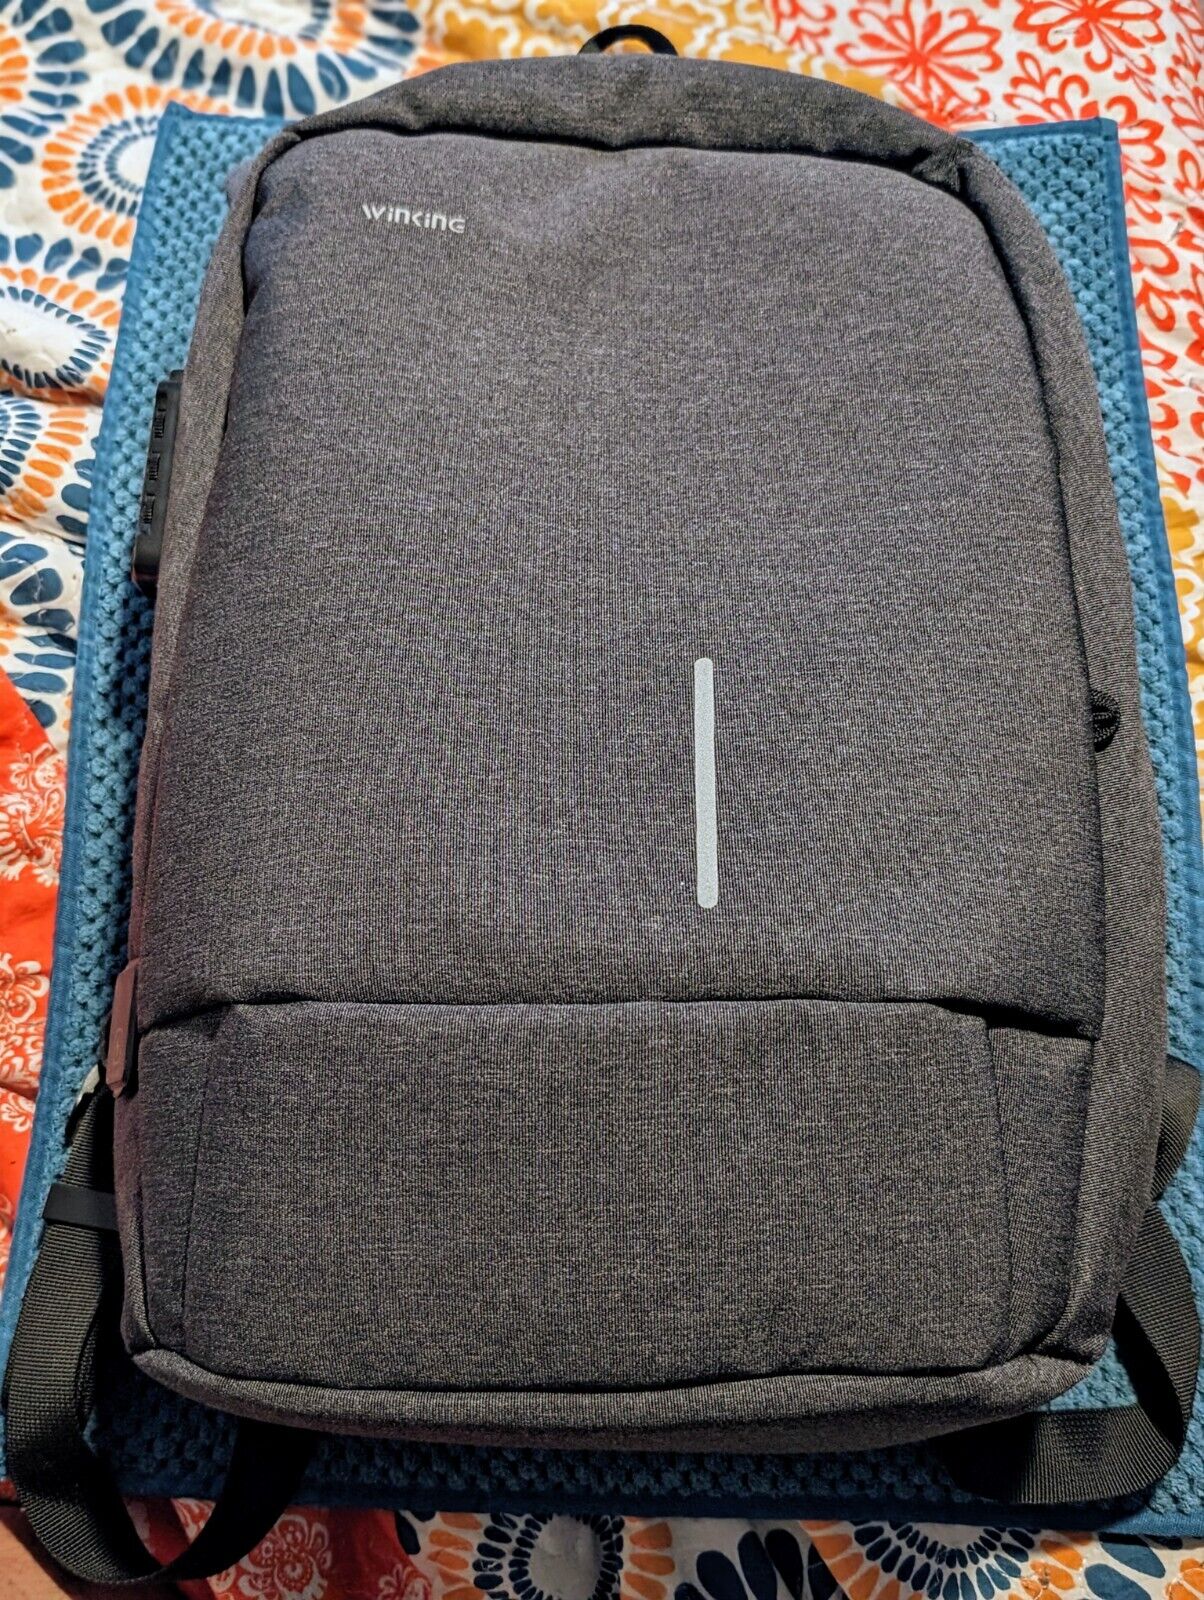 Winking Travel Laptop Backpack for international travel USB Zips From Inside 